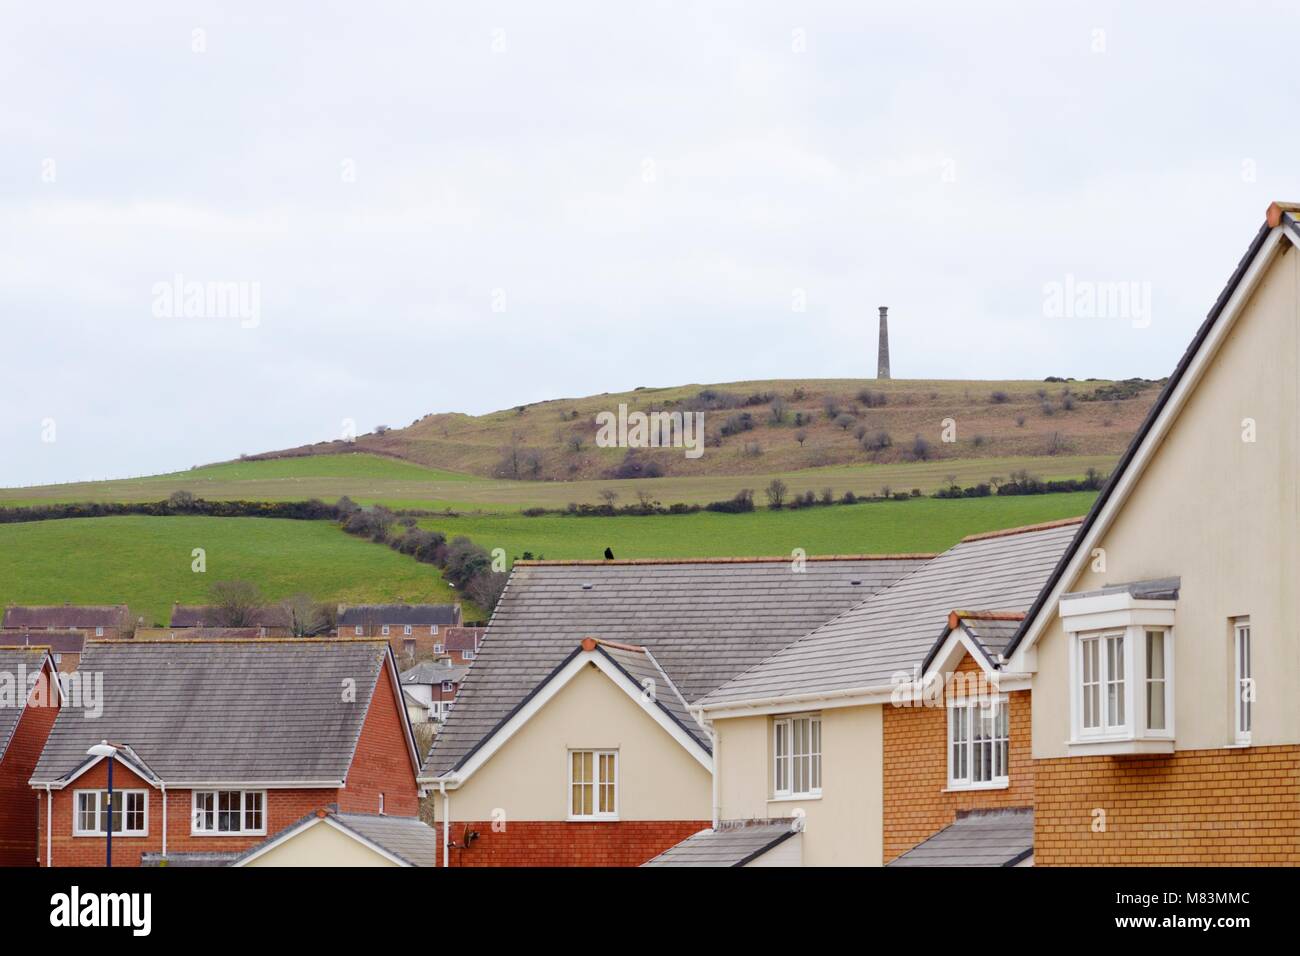 Pen Dinas iron age hillfort, settlement above modern housing, Aberystwyth, Wales, UK. Stock Photo